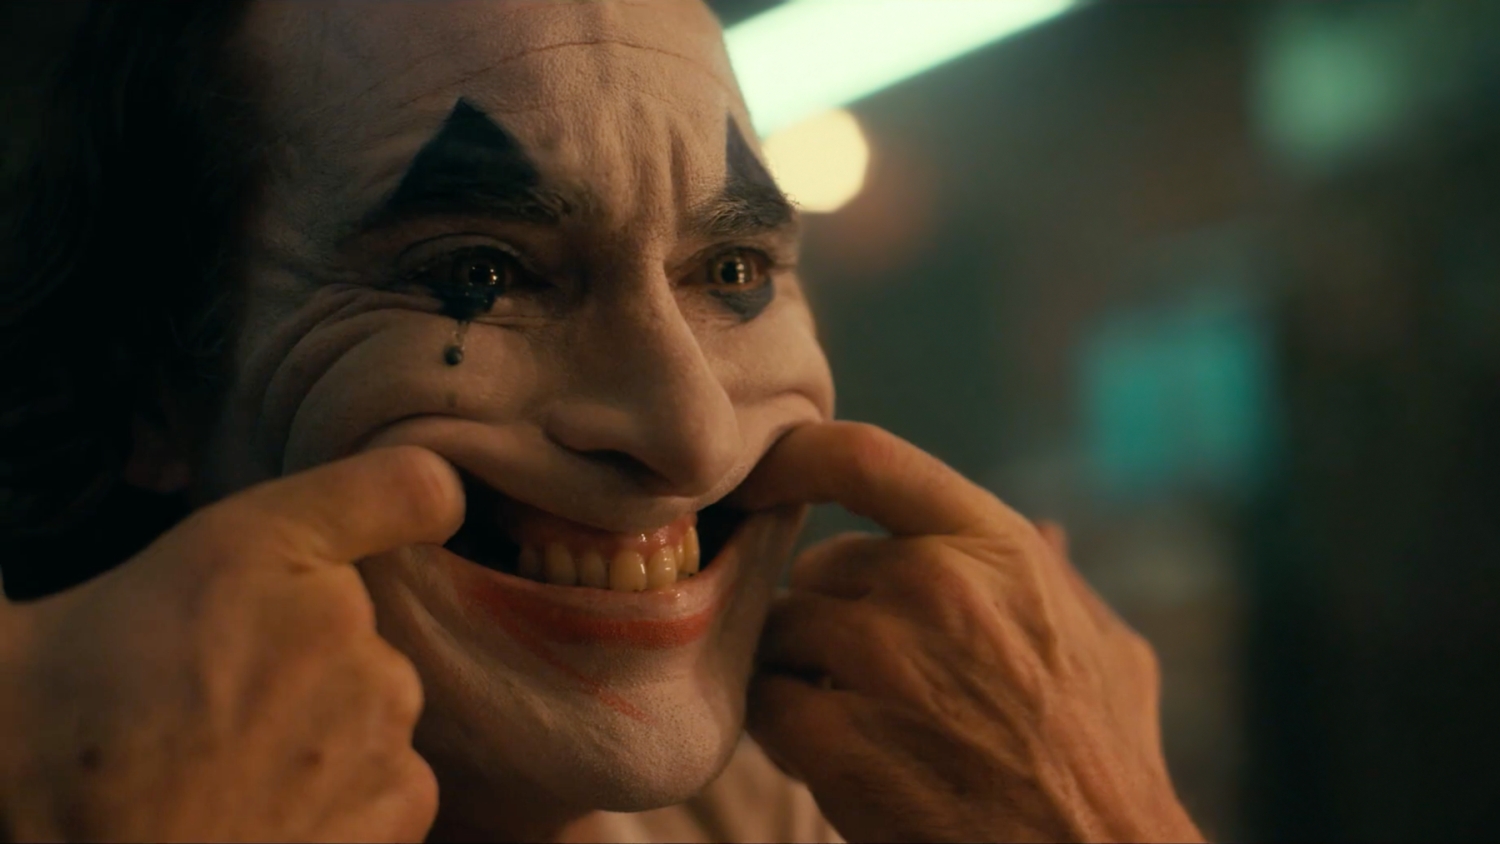 People 1500x844 men makeup smiling crying depth of field Joker (2019 Movie) clown Joaquin Phoenix actor movies closeup